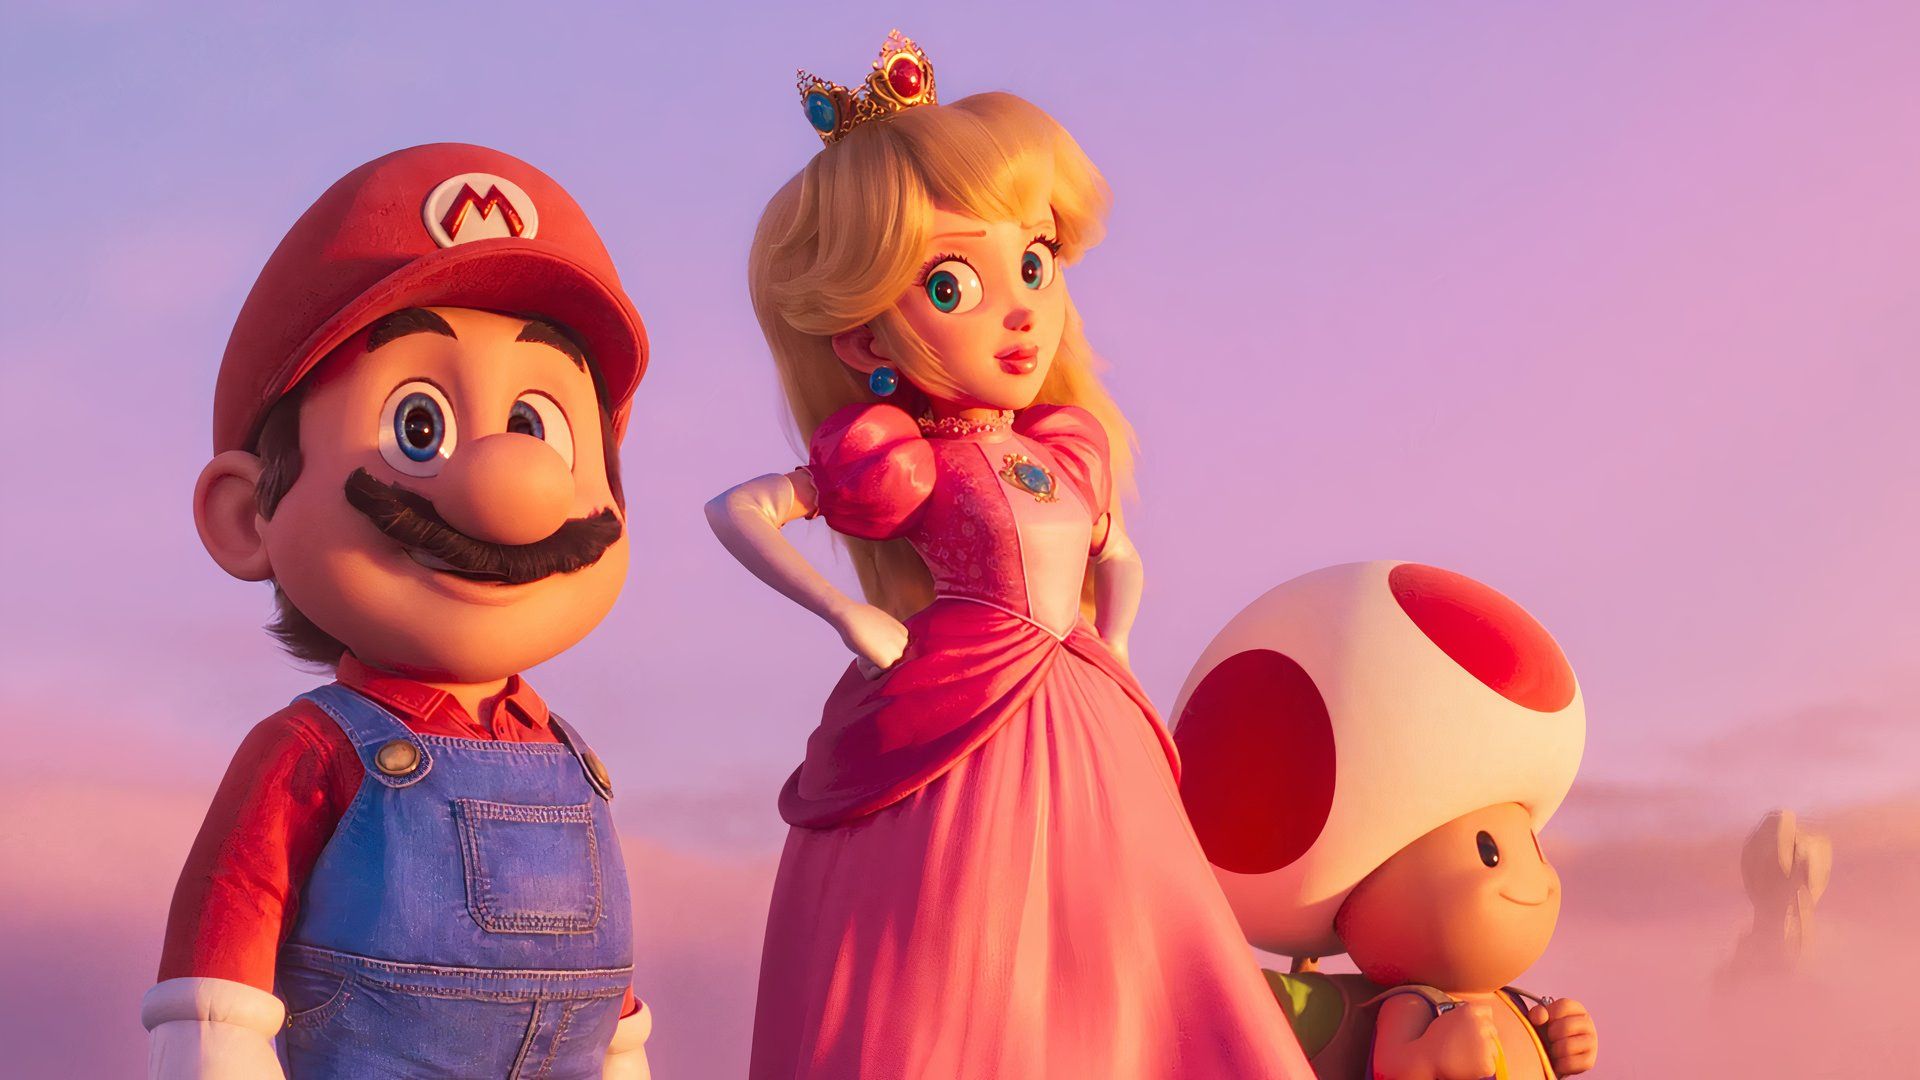 Chris Pratt Teases Super Mario Bros. 2 & Nintendo Cinematic Universe Plans